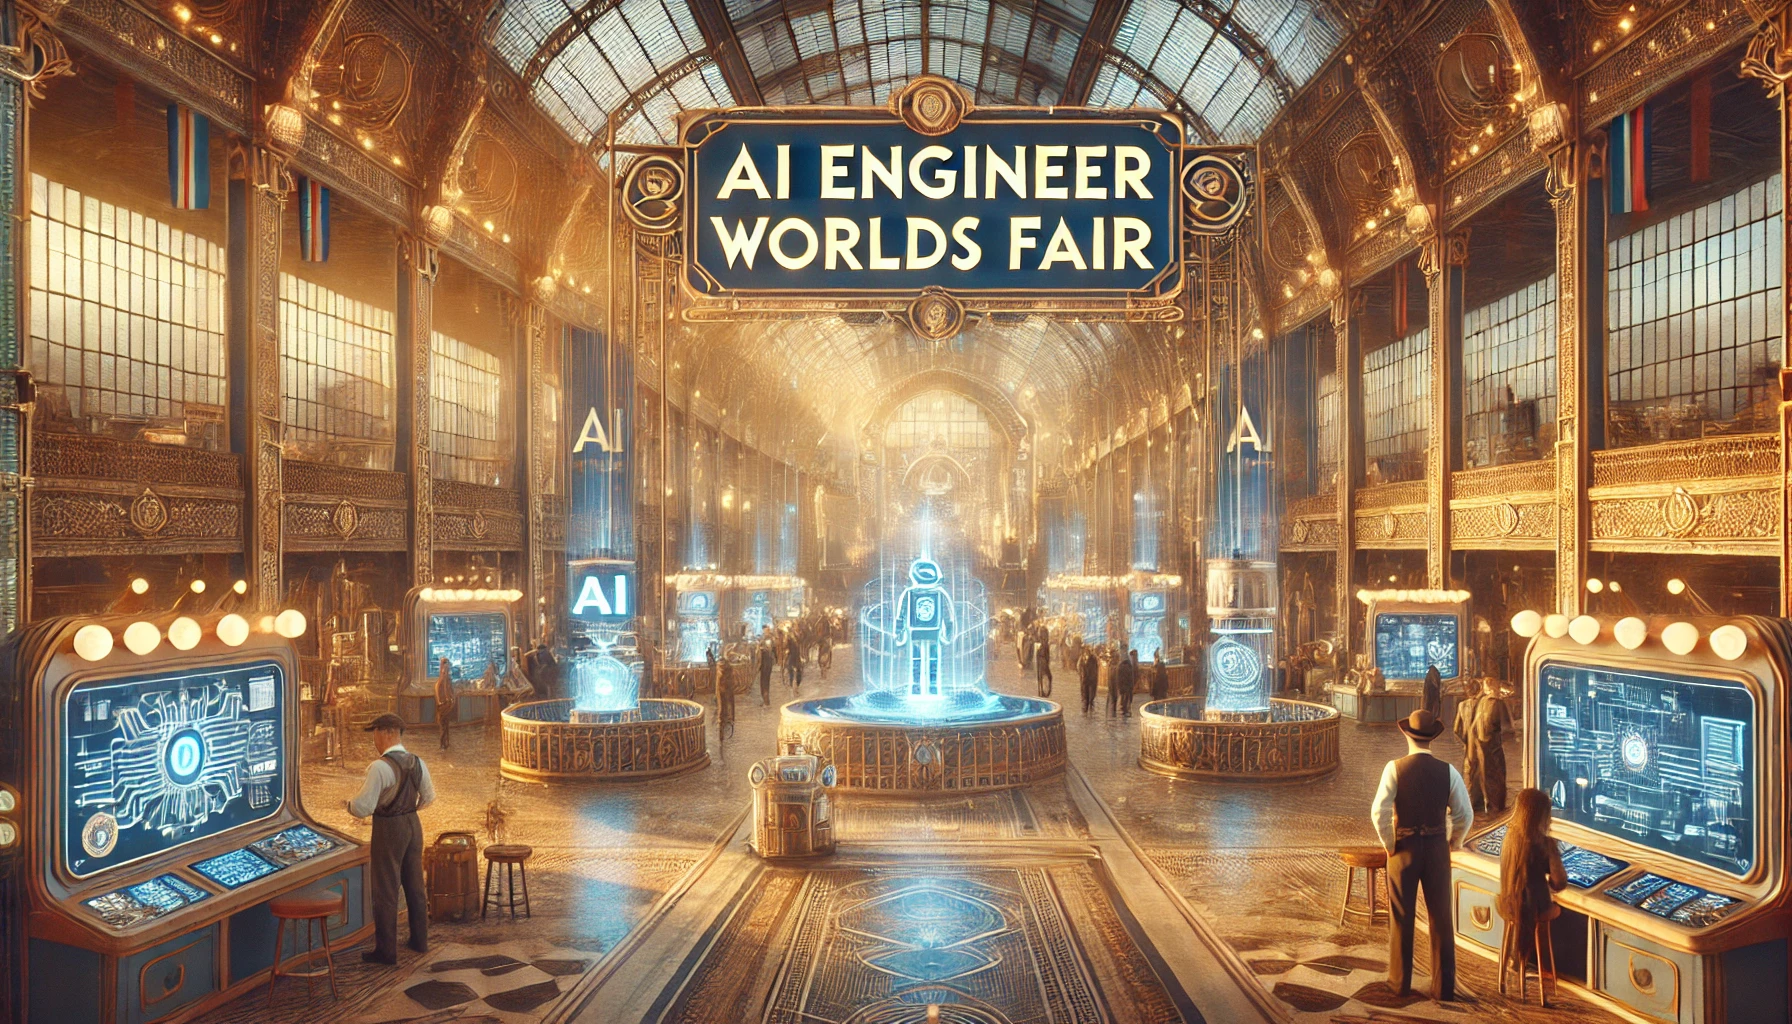 Futurisic retro view of AI Engineer World Fair Expo Hall